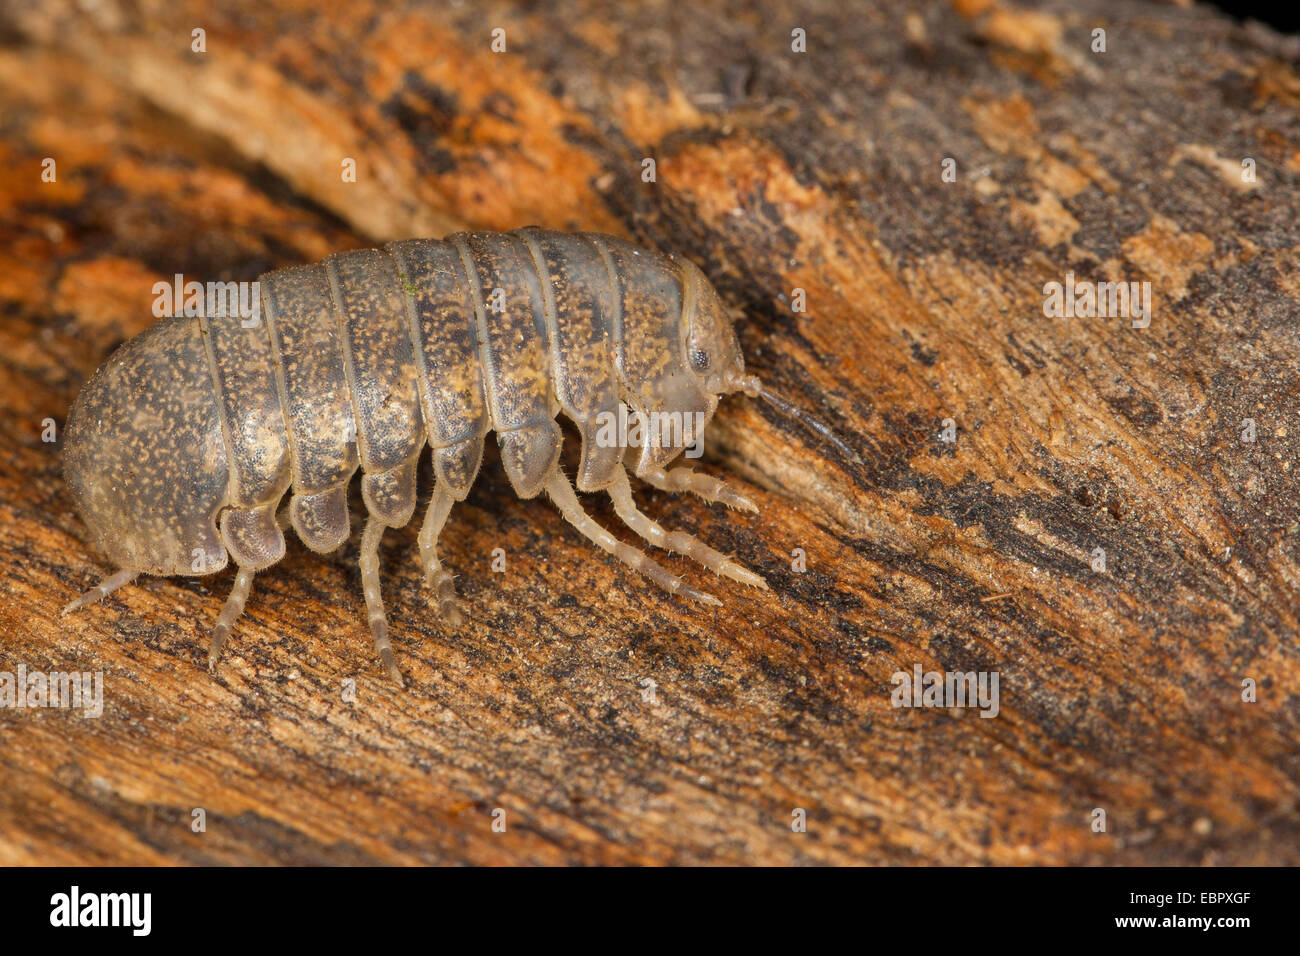 Pillbug, Pill bug (Helleria brevicornis), on wood, France, Corsica Stock Photo